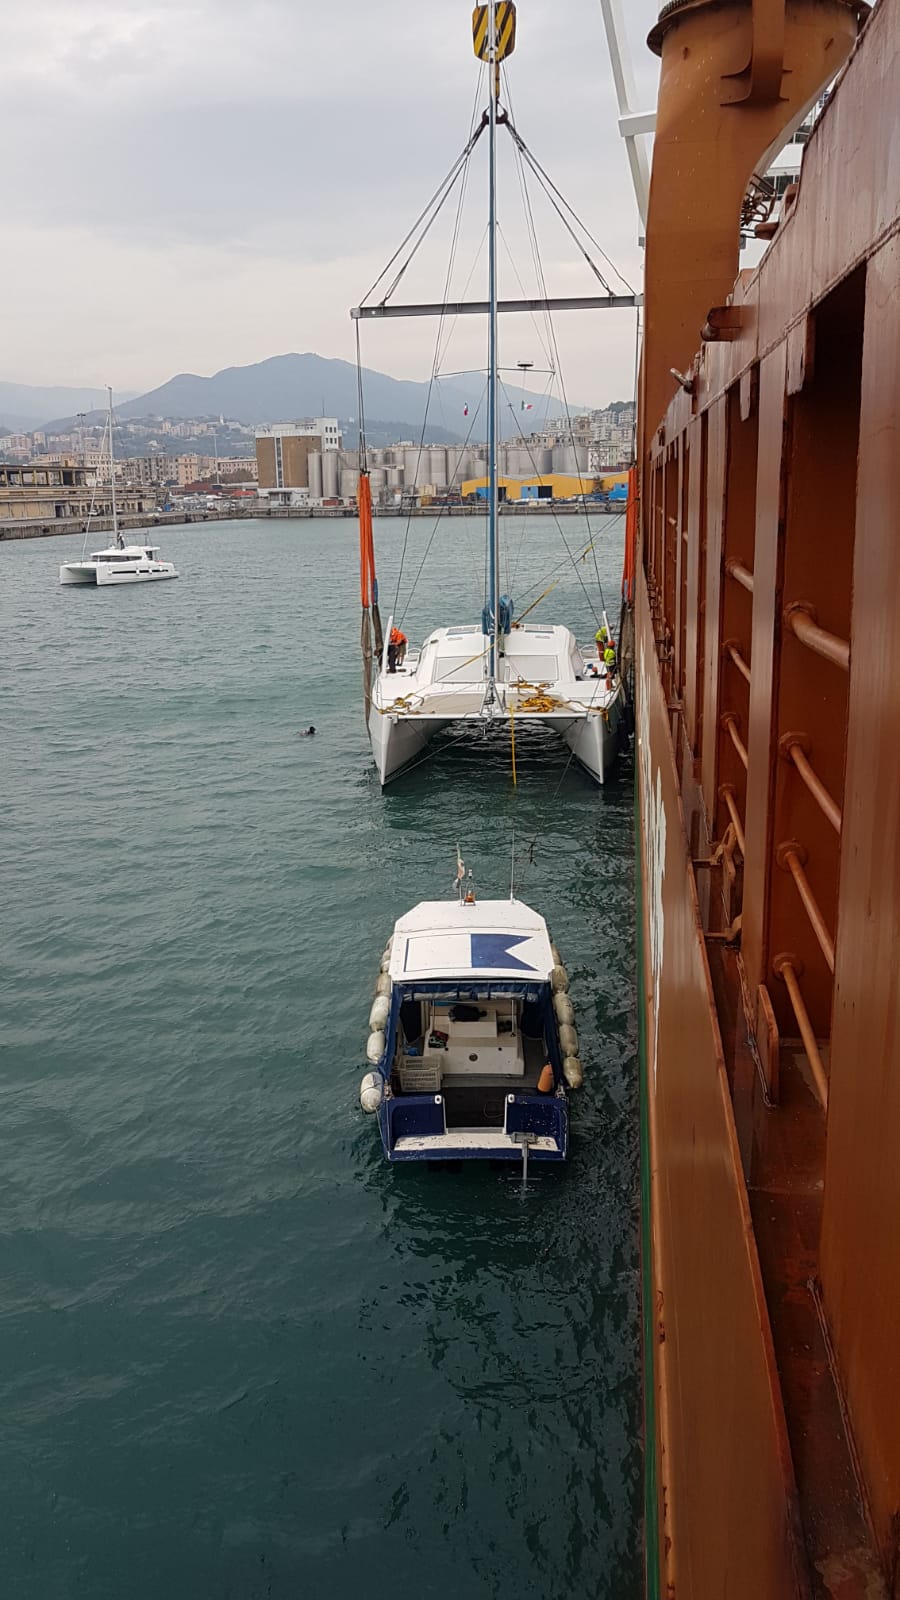 Catamaran loading on cargo